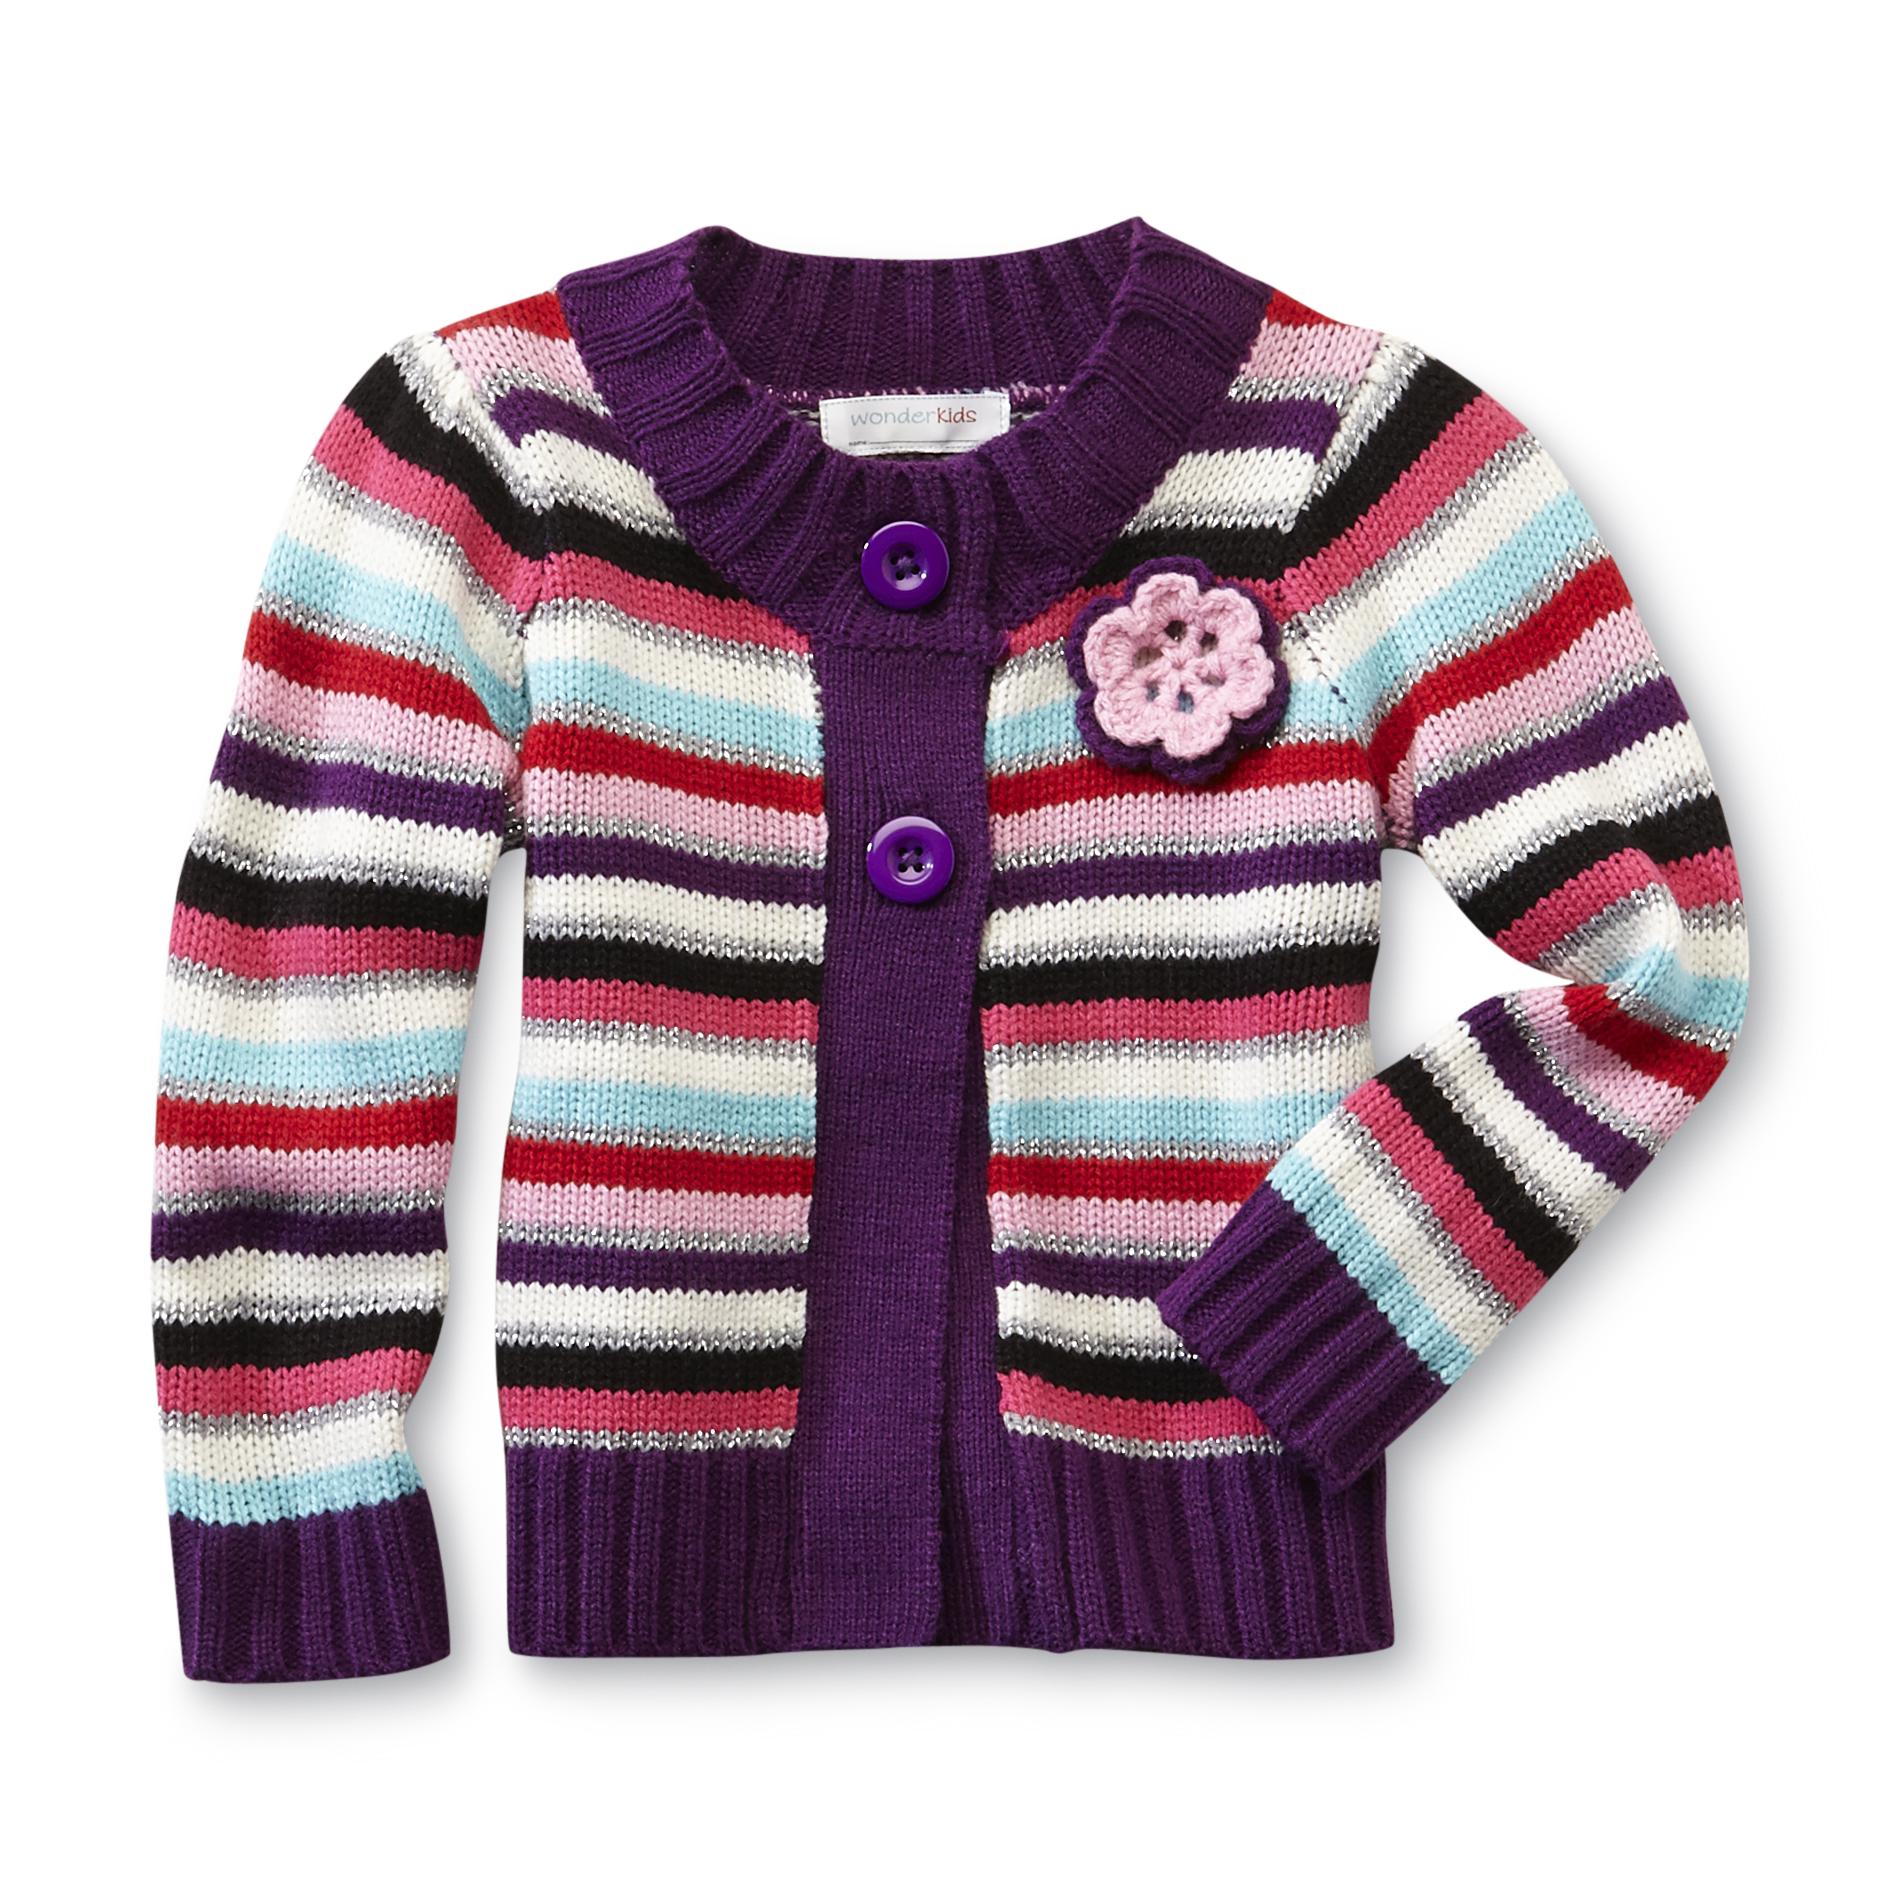 WonderKids Infant & Toddler Girl's Cardigan Sweater - Striped